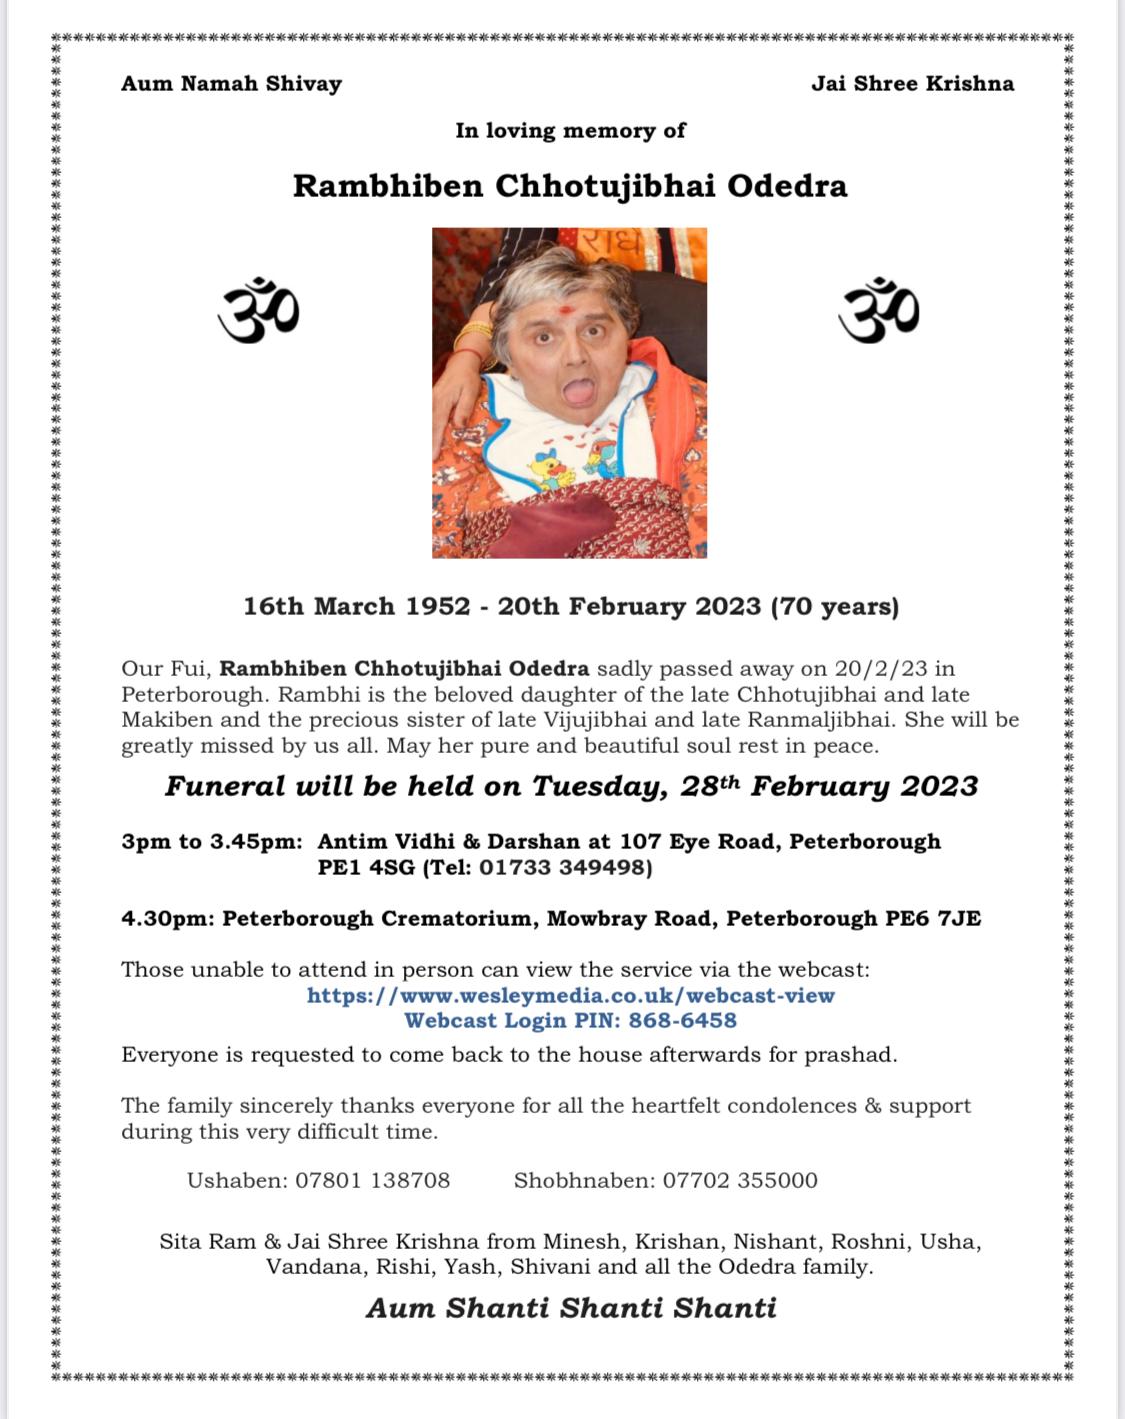 Rambhiben Chhotujibhai Odedra Paased away